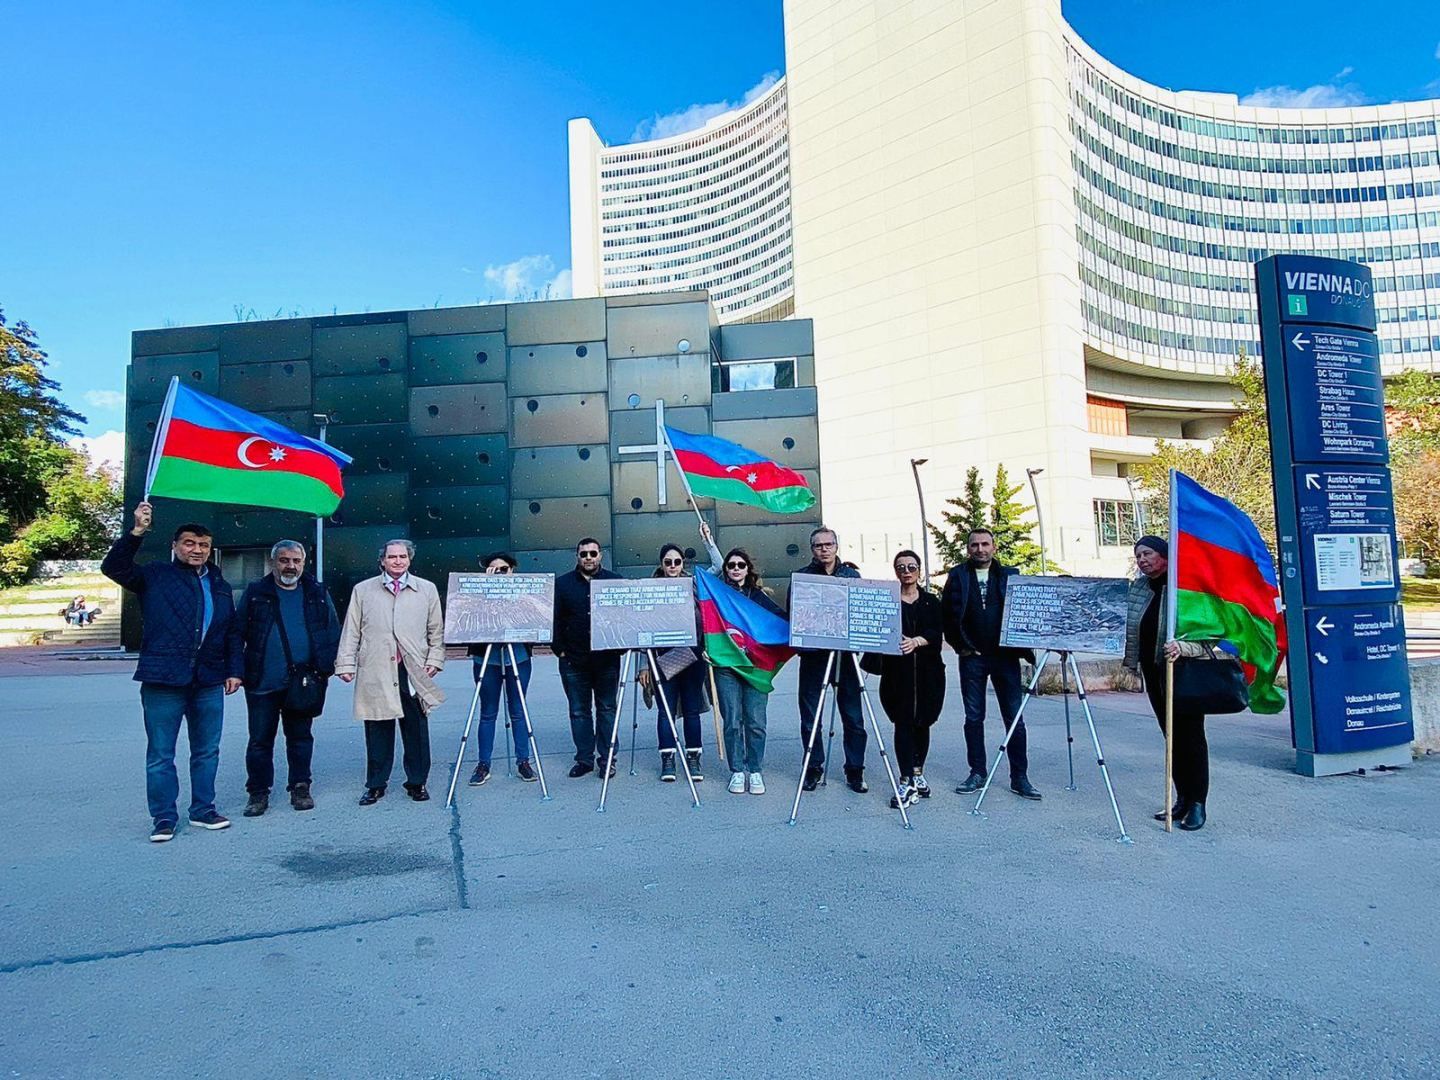 Azerbaijanis in Vienna denounce Armenian vandalism against civilians in 2020 Karabakh war [PHOTOS]